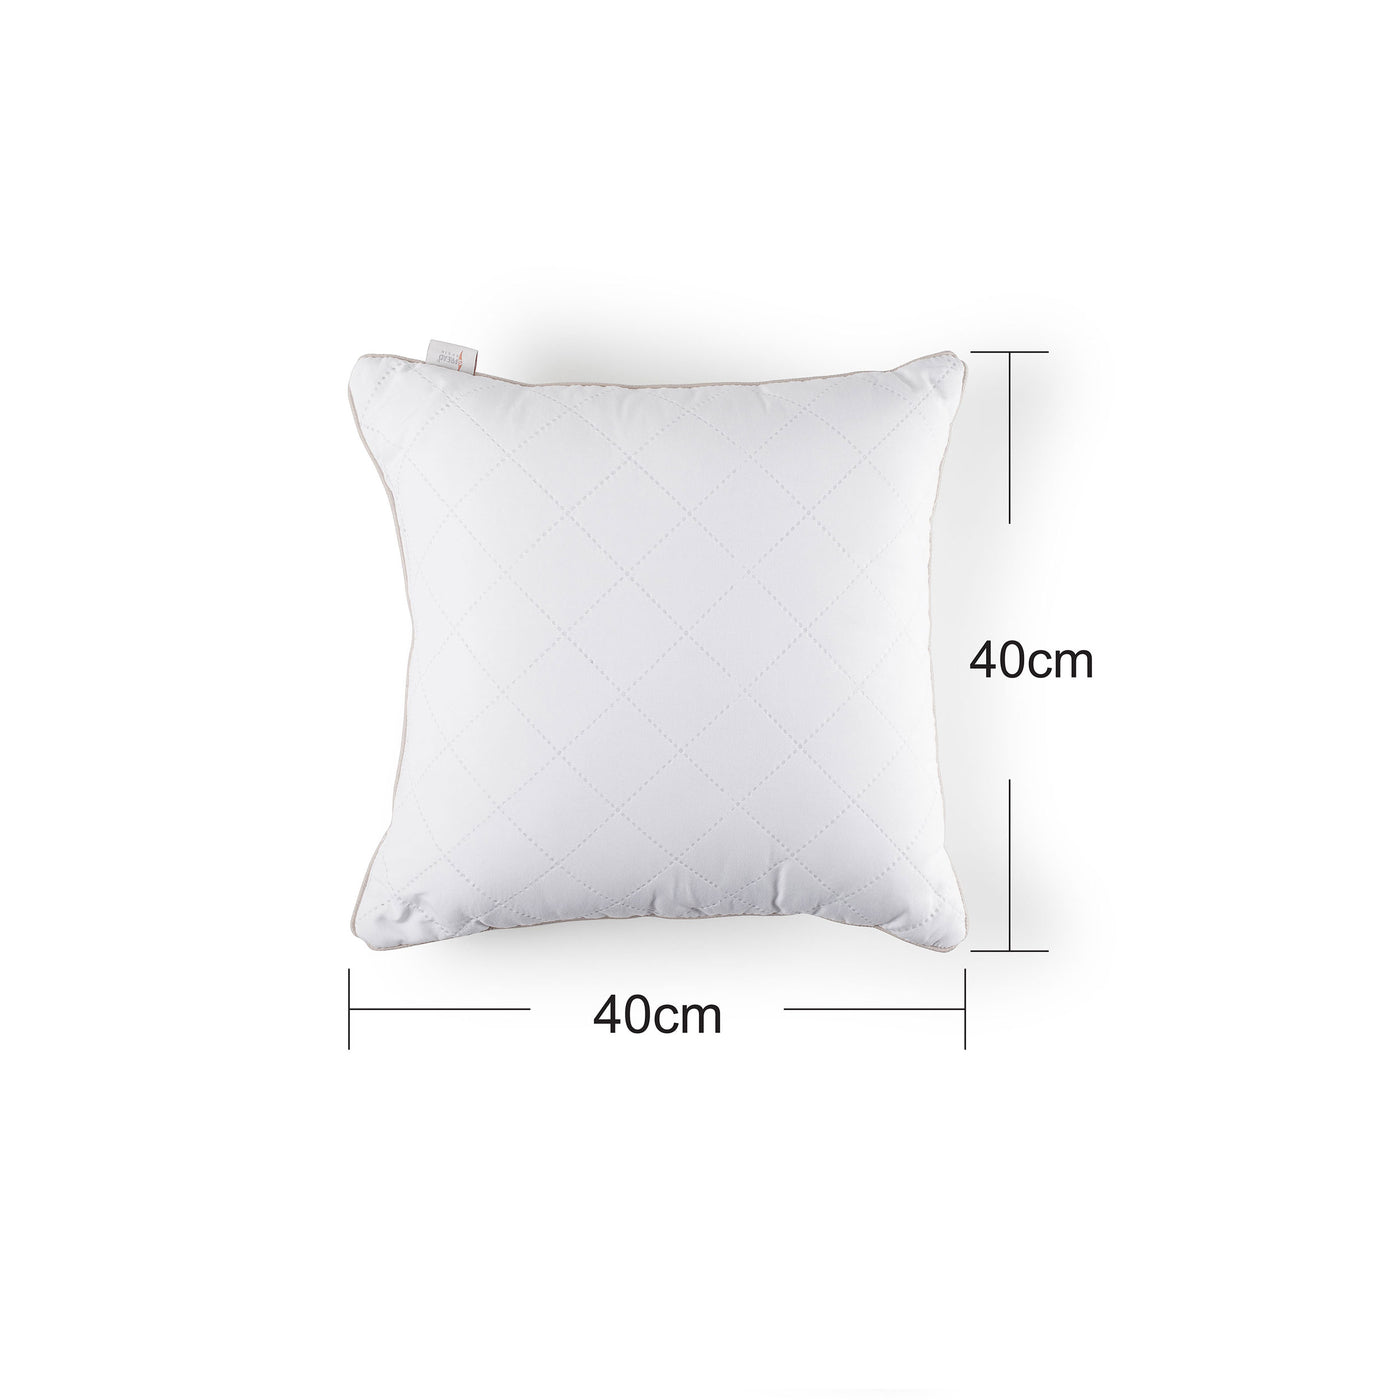 Medium Firm Cushion 40cm x 40cm